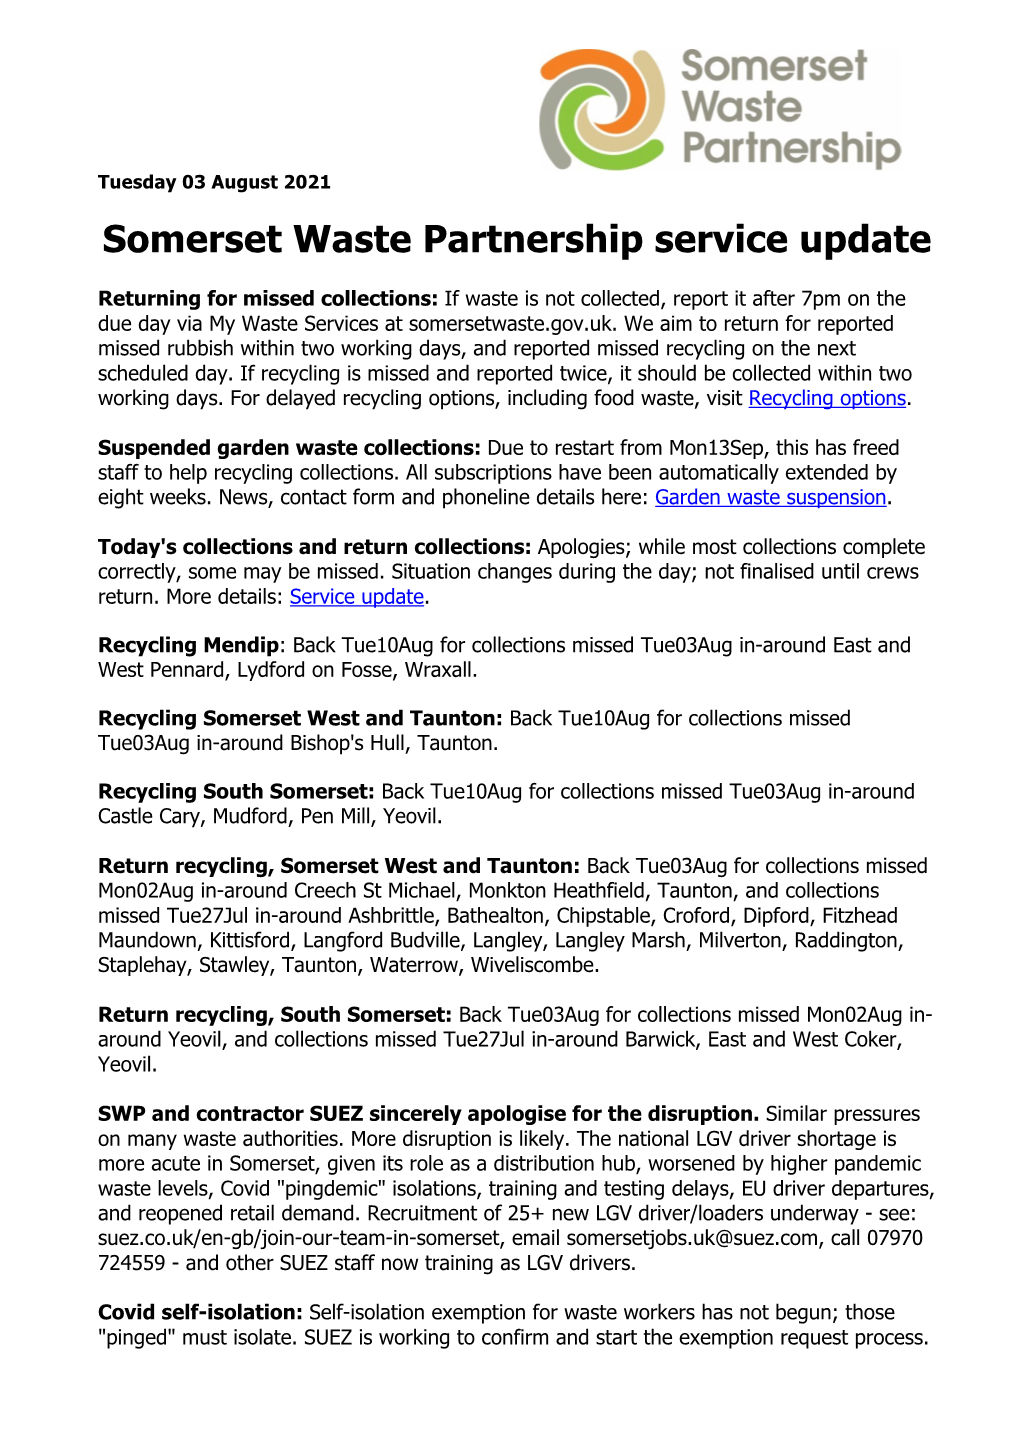 Somerset Waste Partnership Service Update